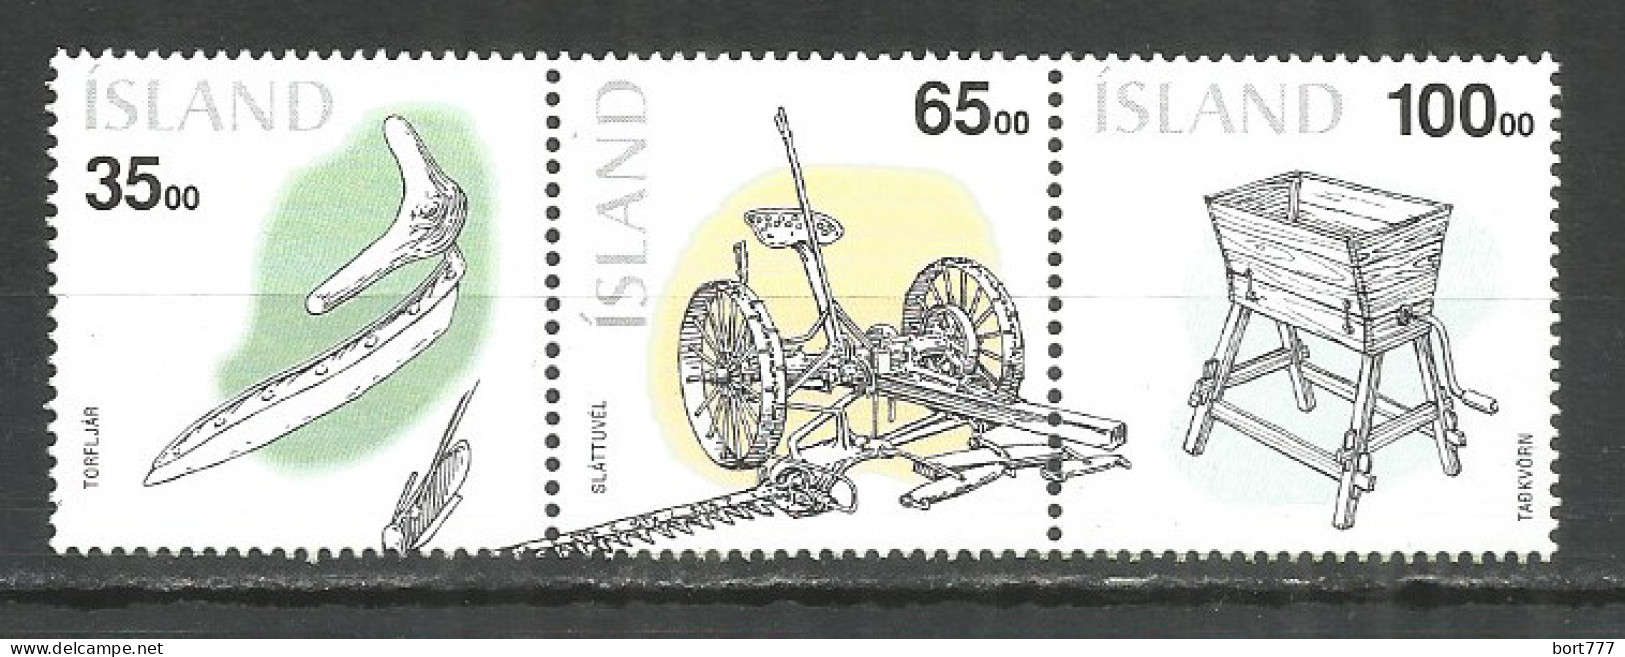 ICELAND 1998 Mint Stamps MNH(**) Set  - Nuevos